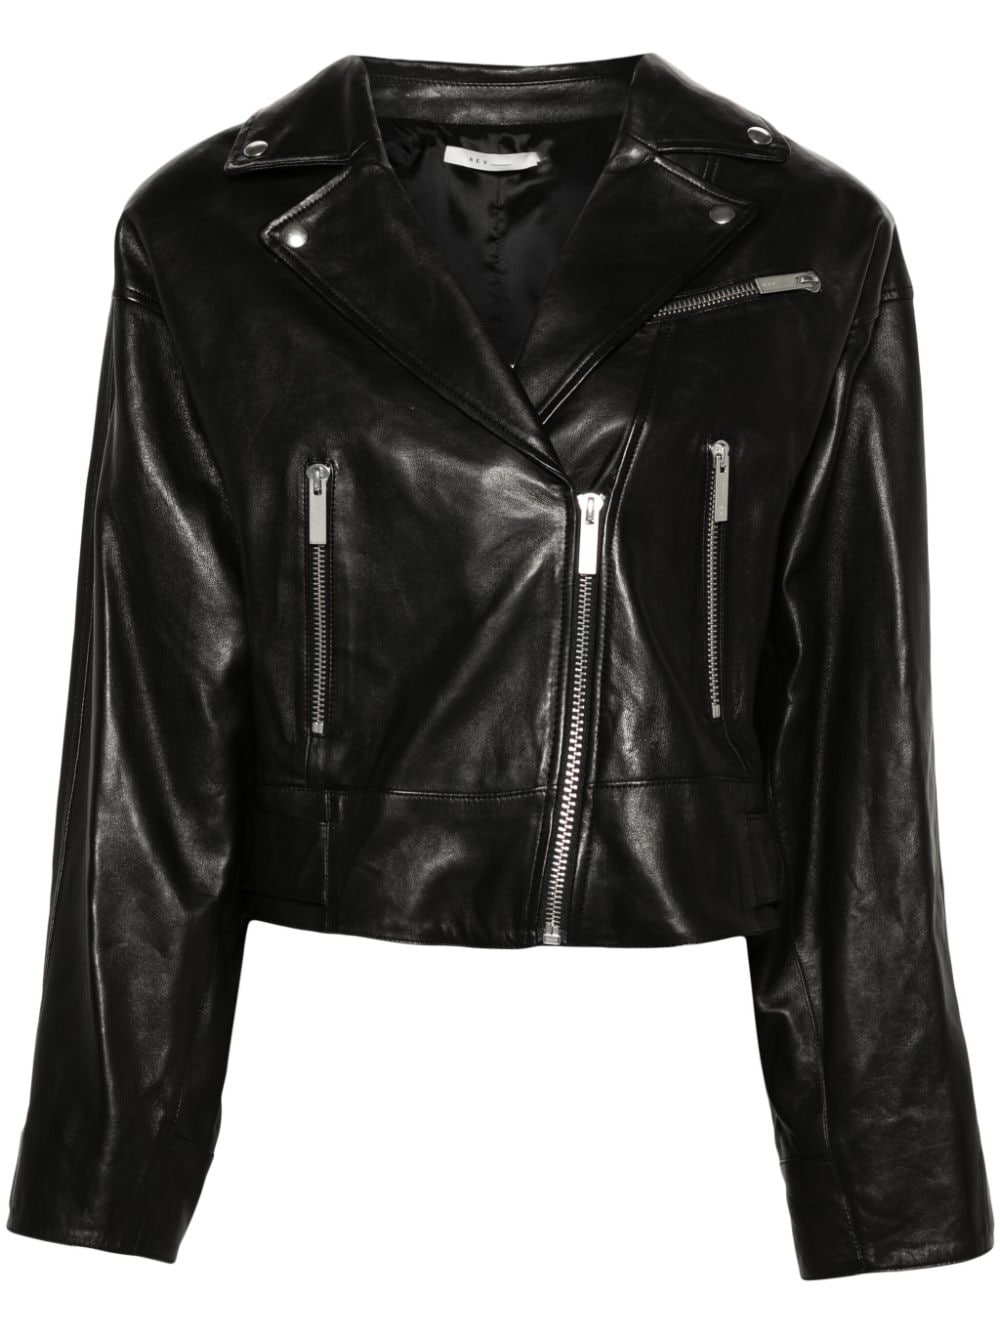 The Ariadne leather jacket